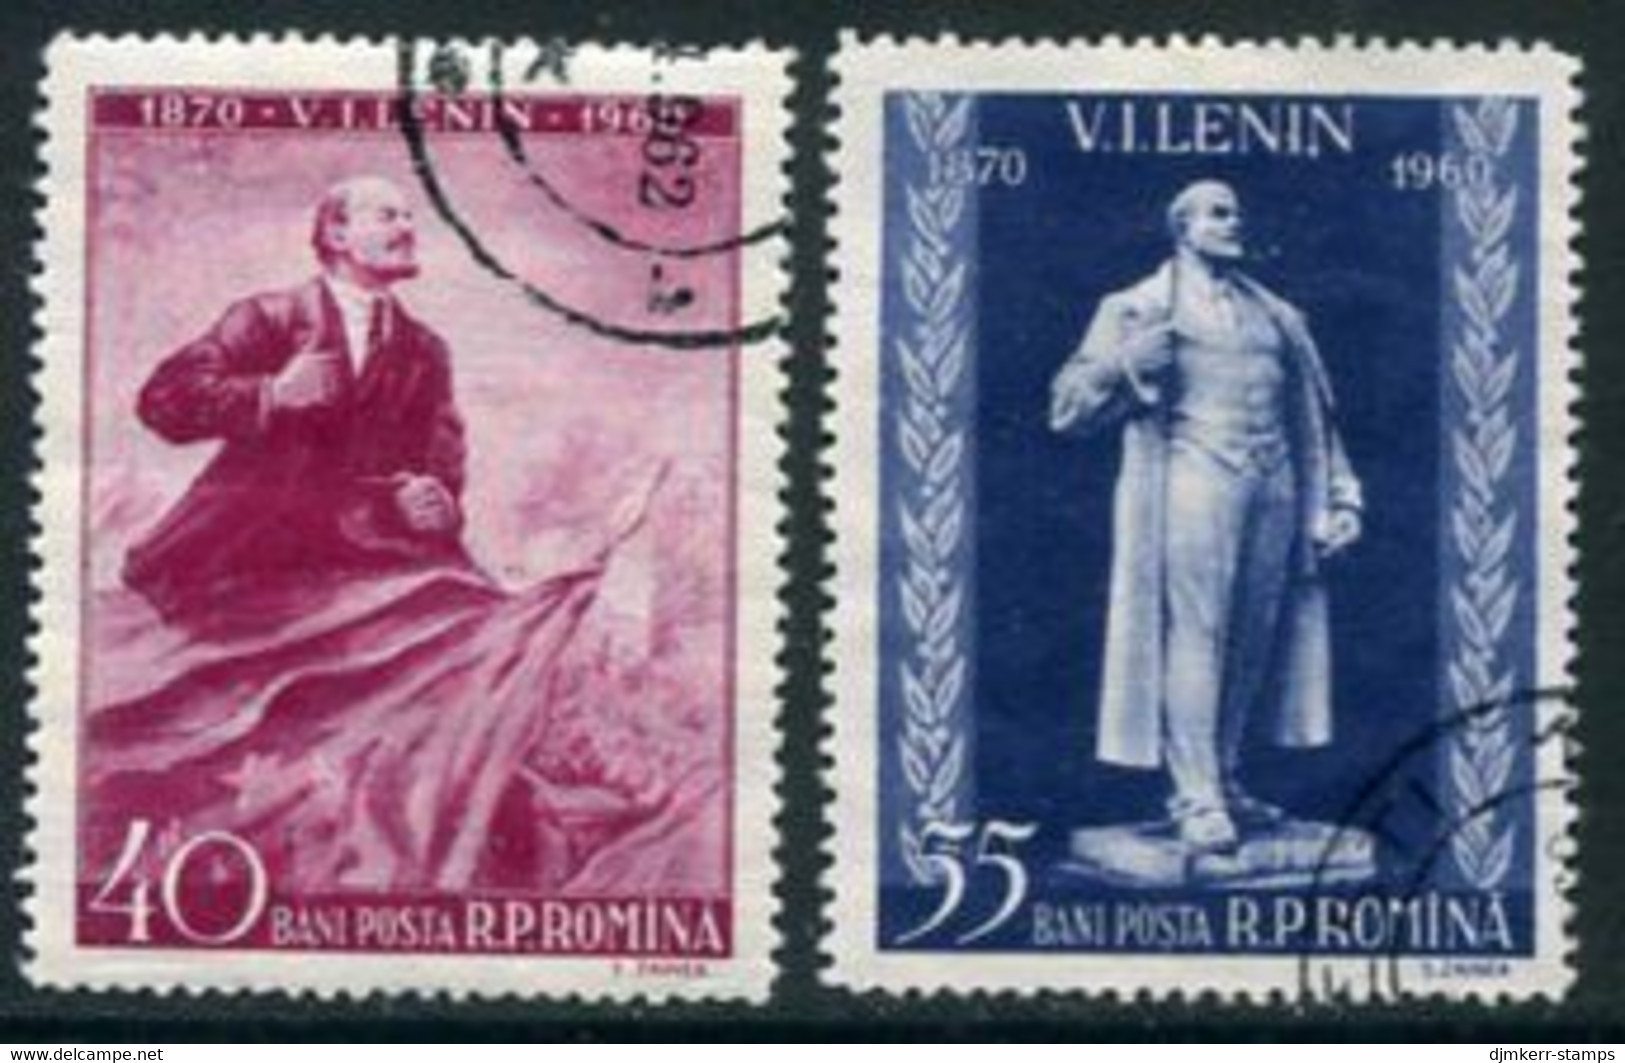 ROMANIA 1960 Lenin Anniversary Used.  Michel 1840-41 - Gebruikt